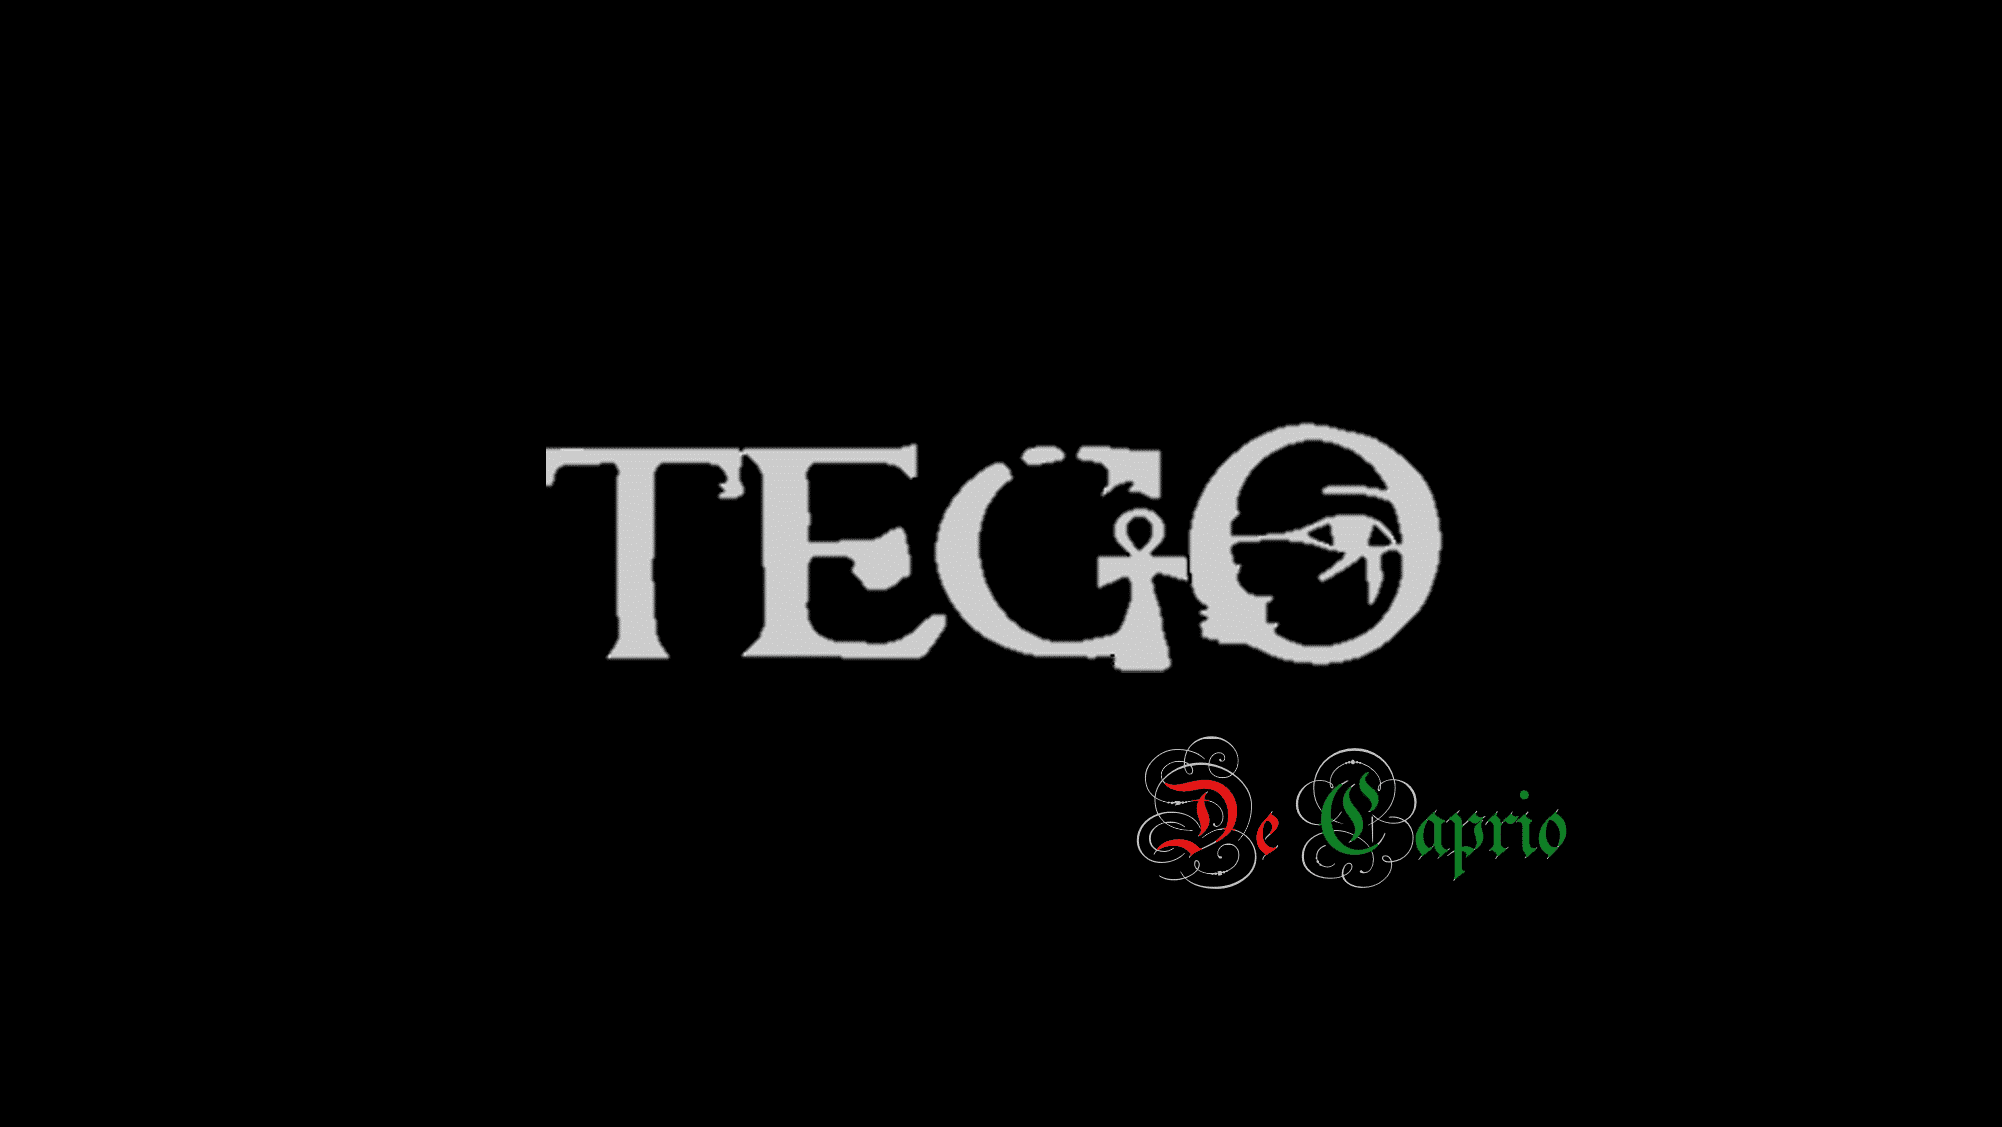 Tegos World